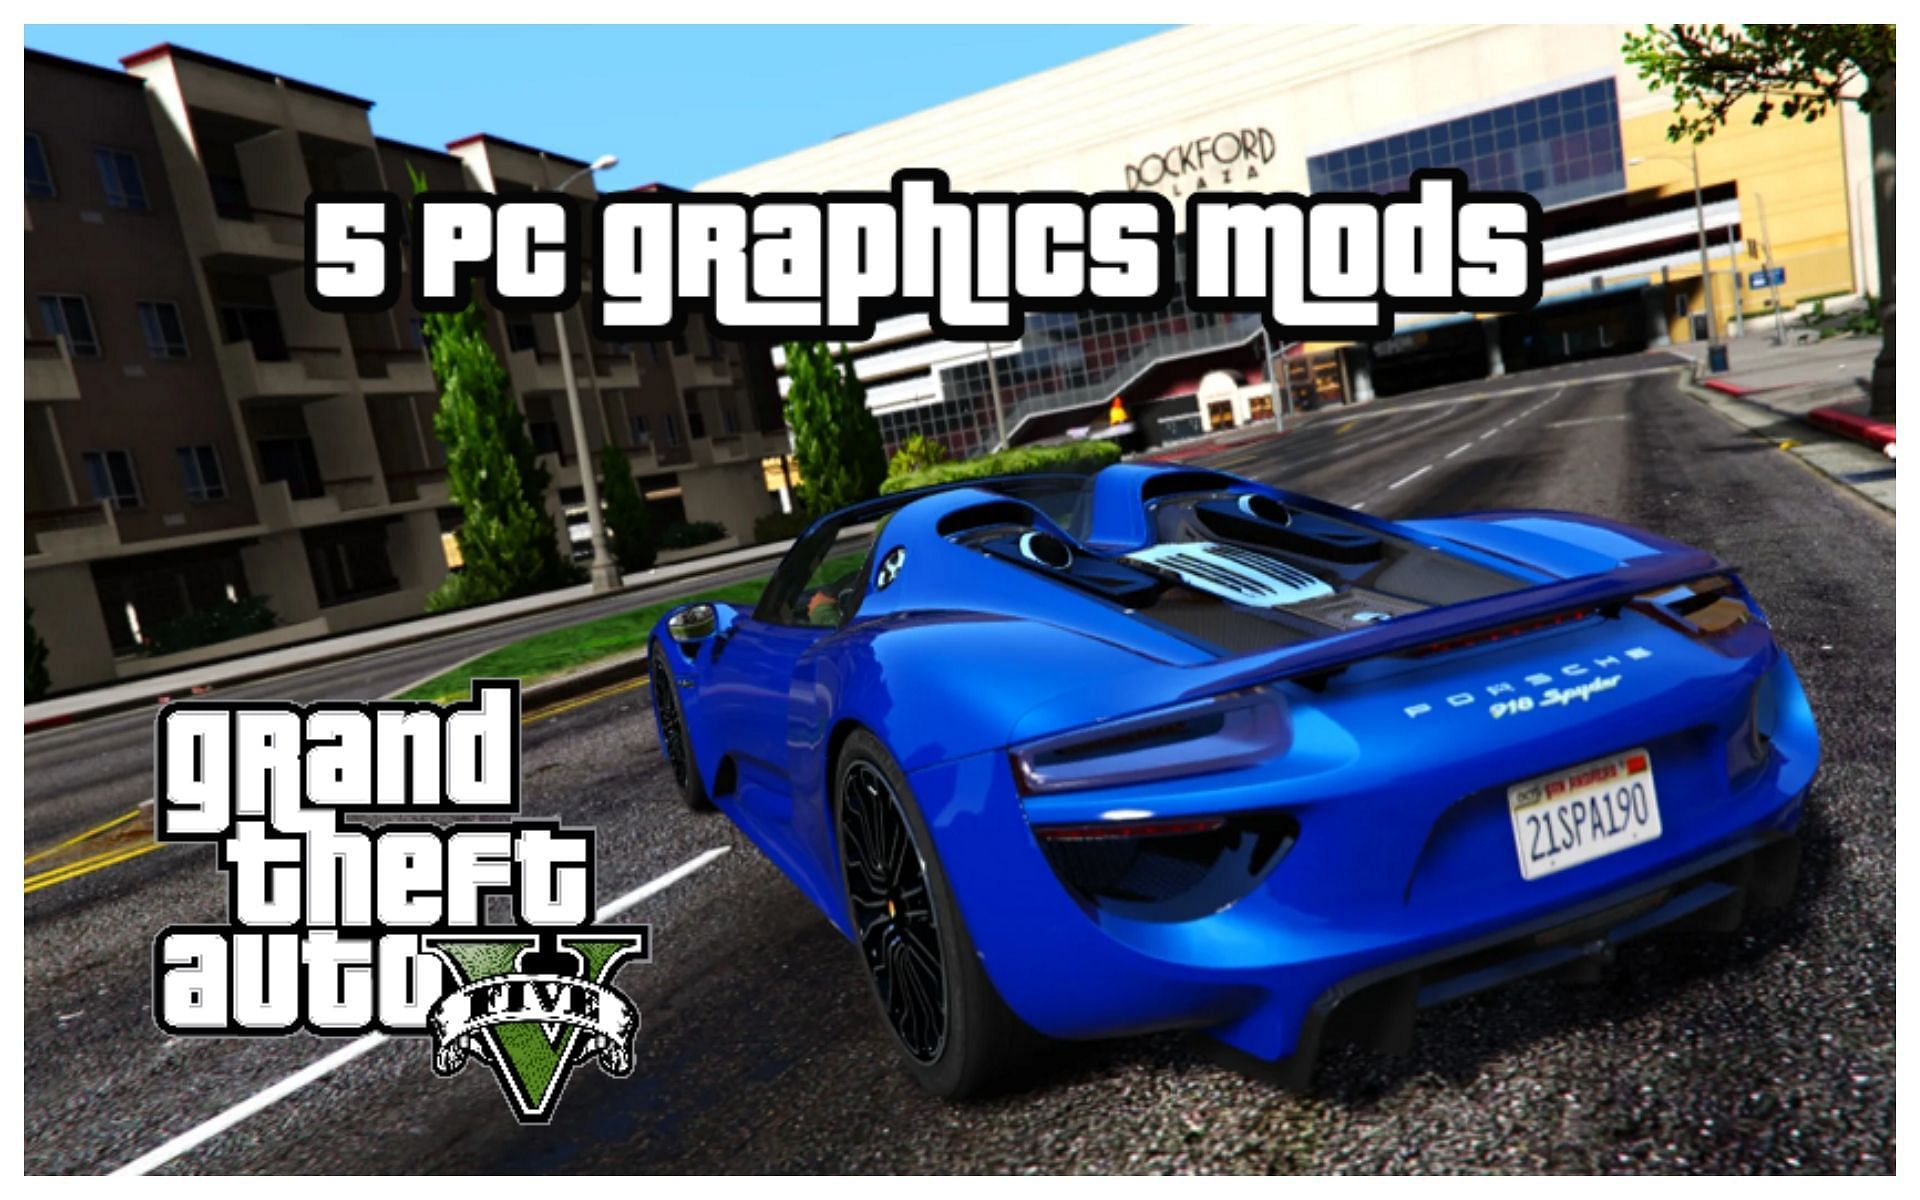 GTA 5 GTA 5 Redux mod for low end pc Mod 